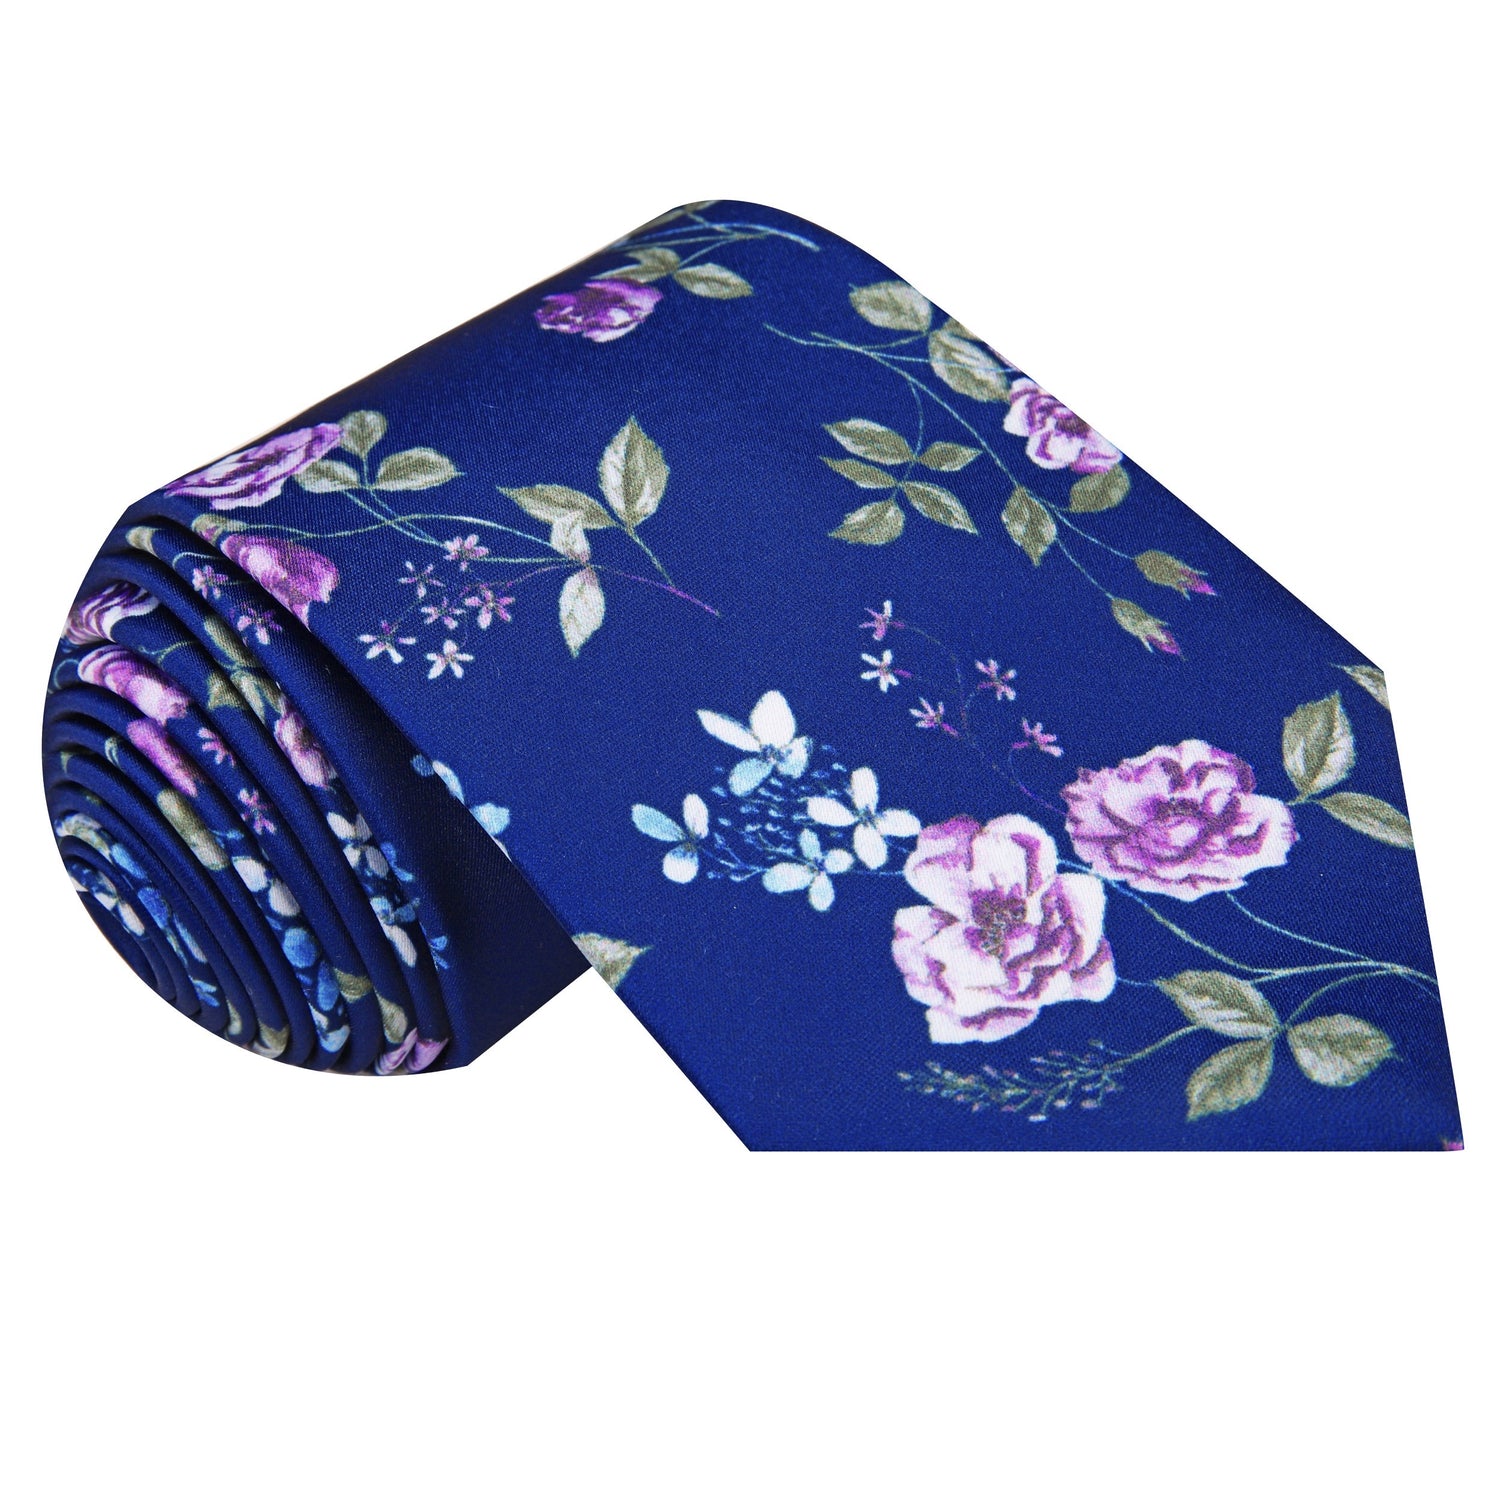 Single Tie: Blue, Green, White Flowers Necktie  